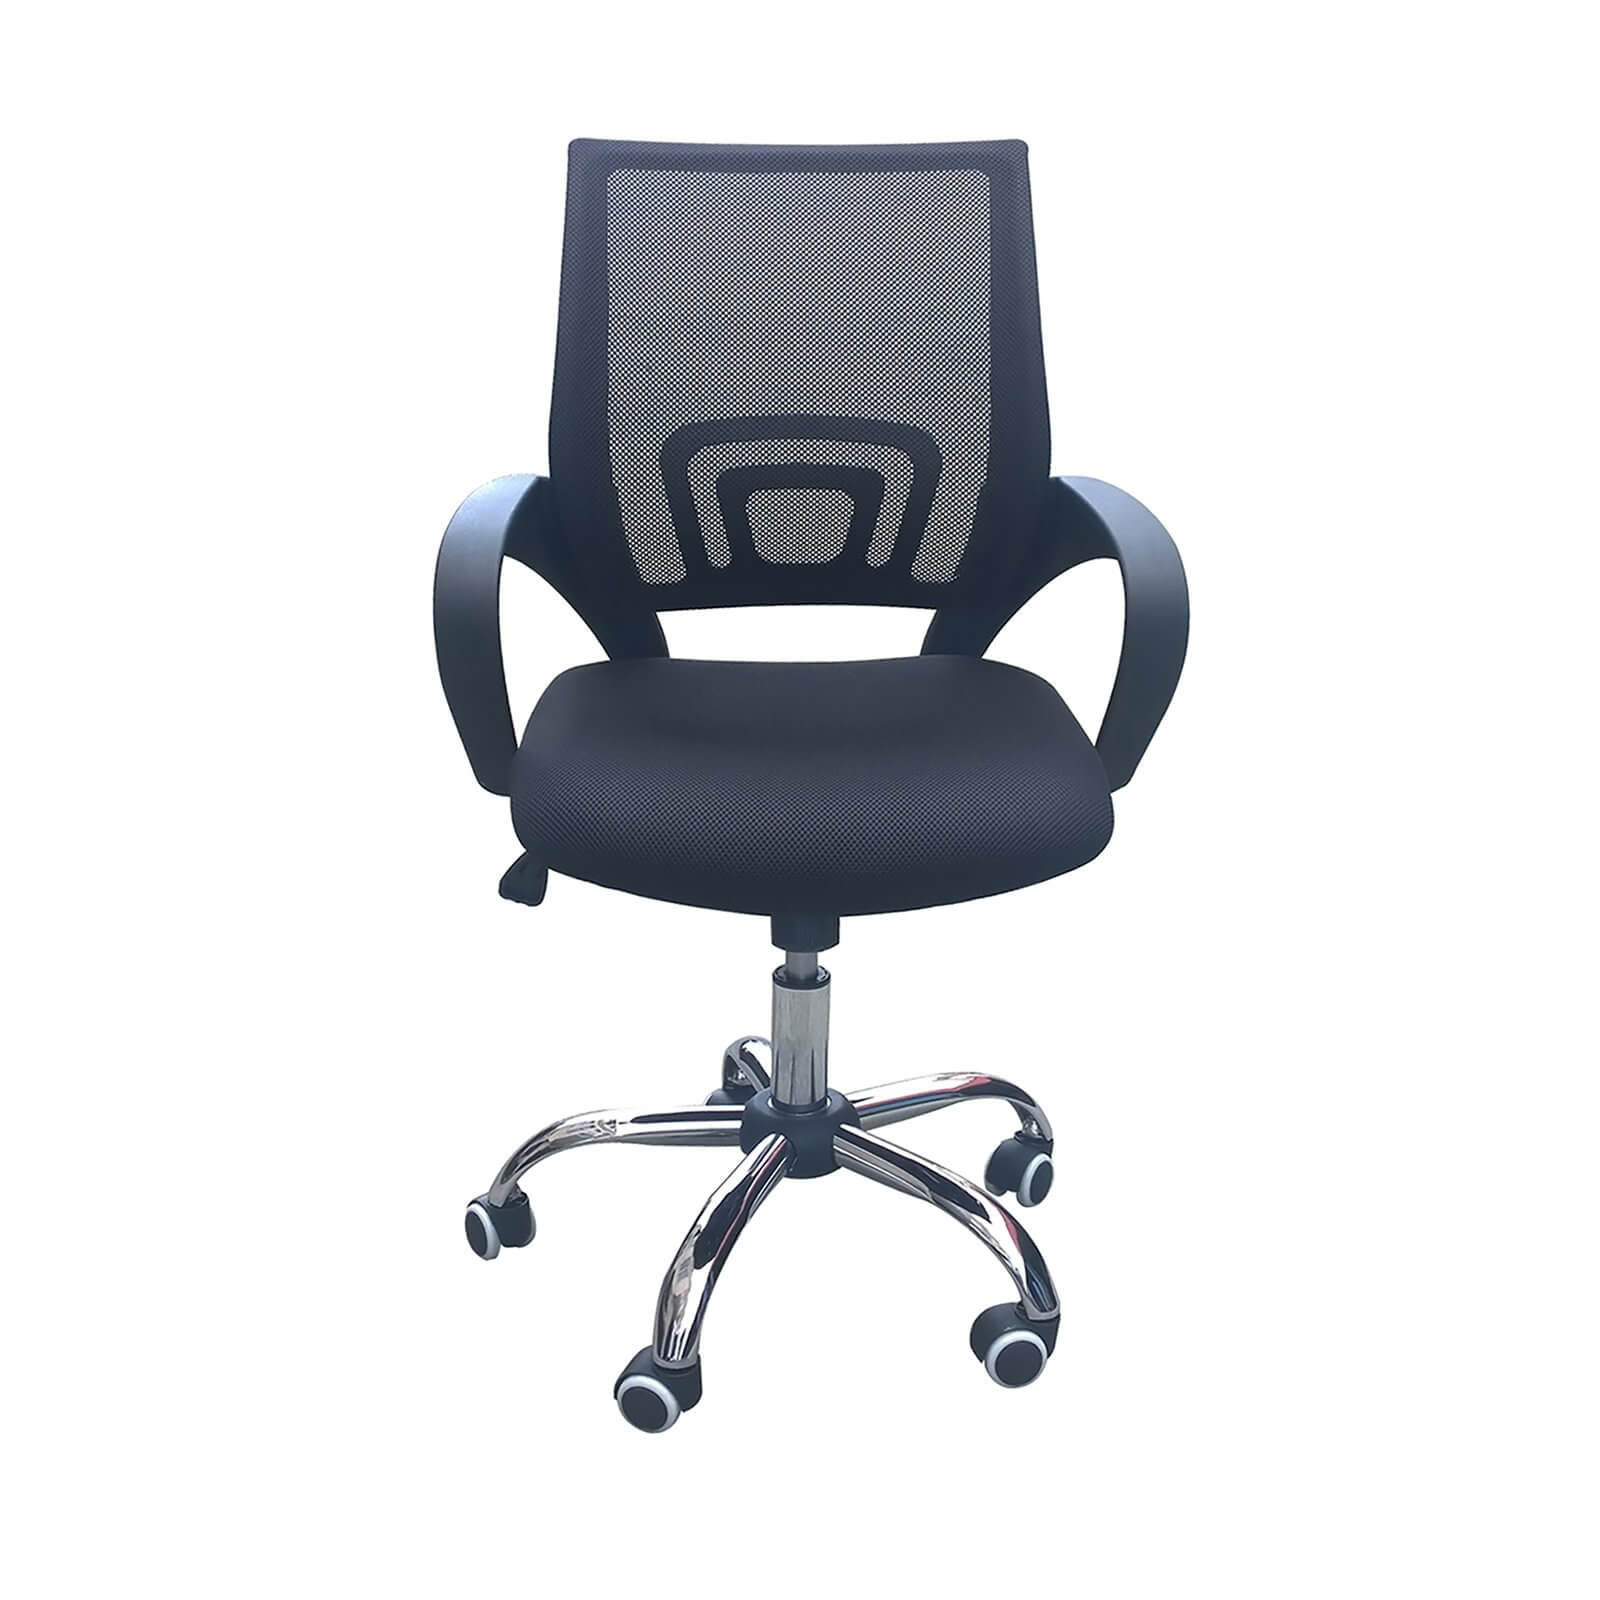 Tate Mesh Back Office Chair - Black